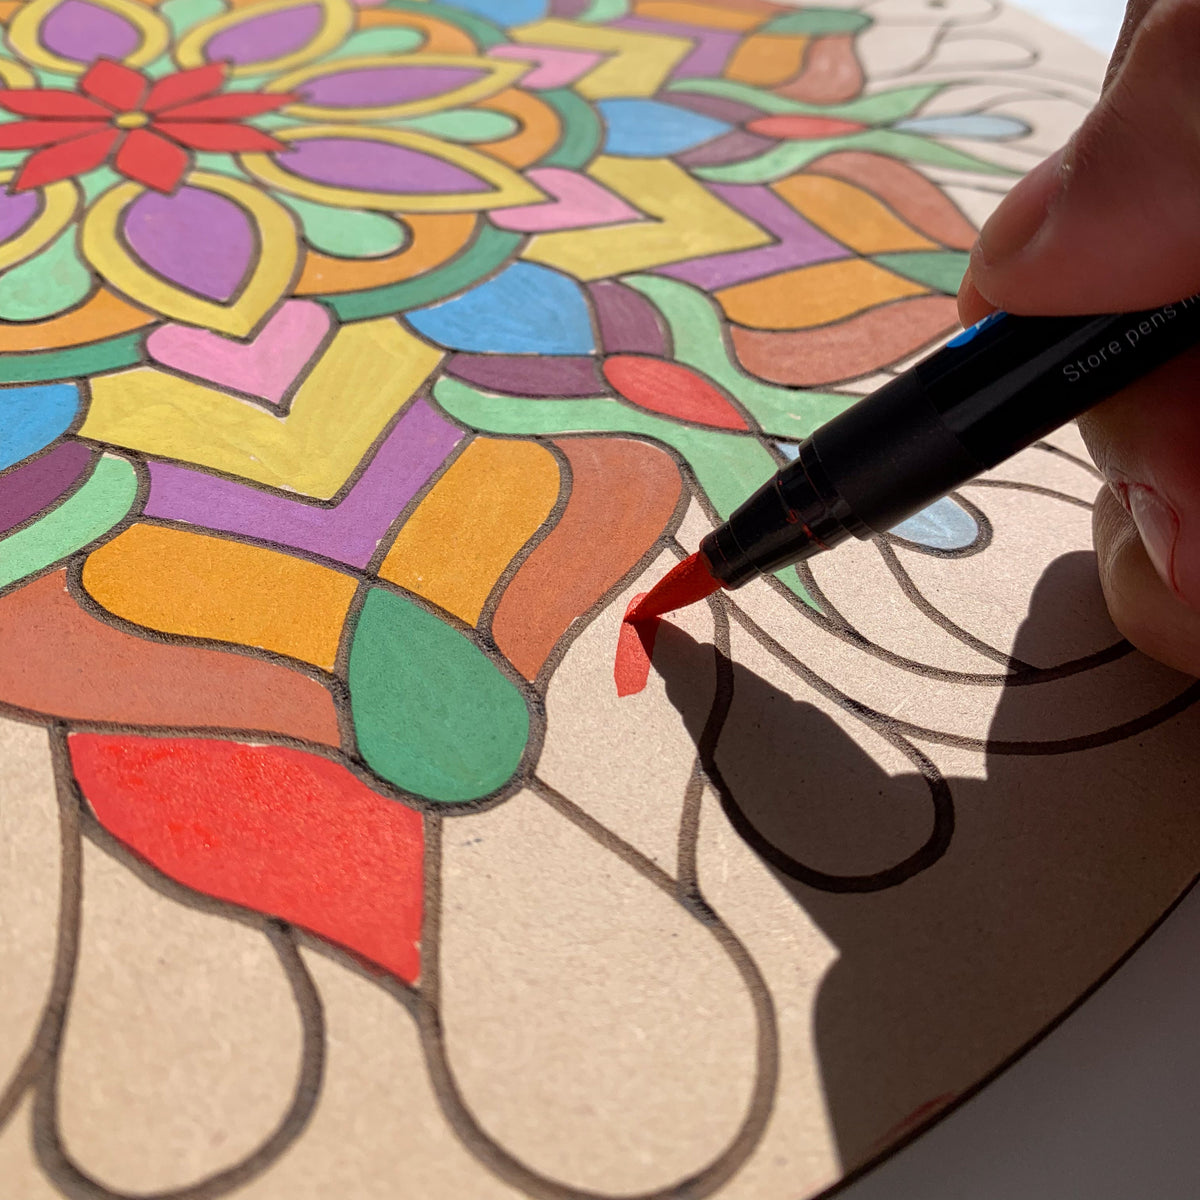 Life of Colour Black Mandala Painting Kit - The Dancer (Essentials)